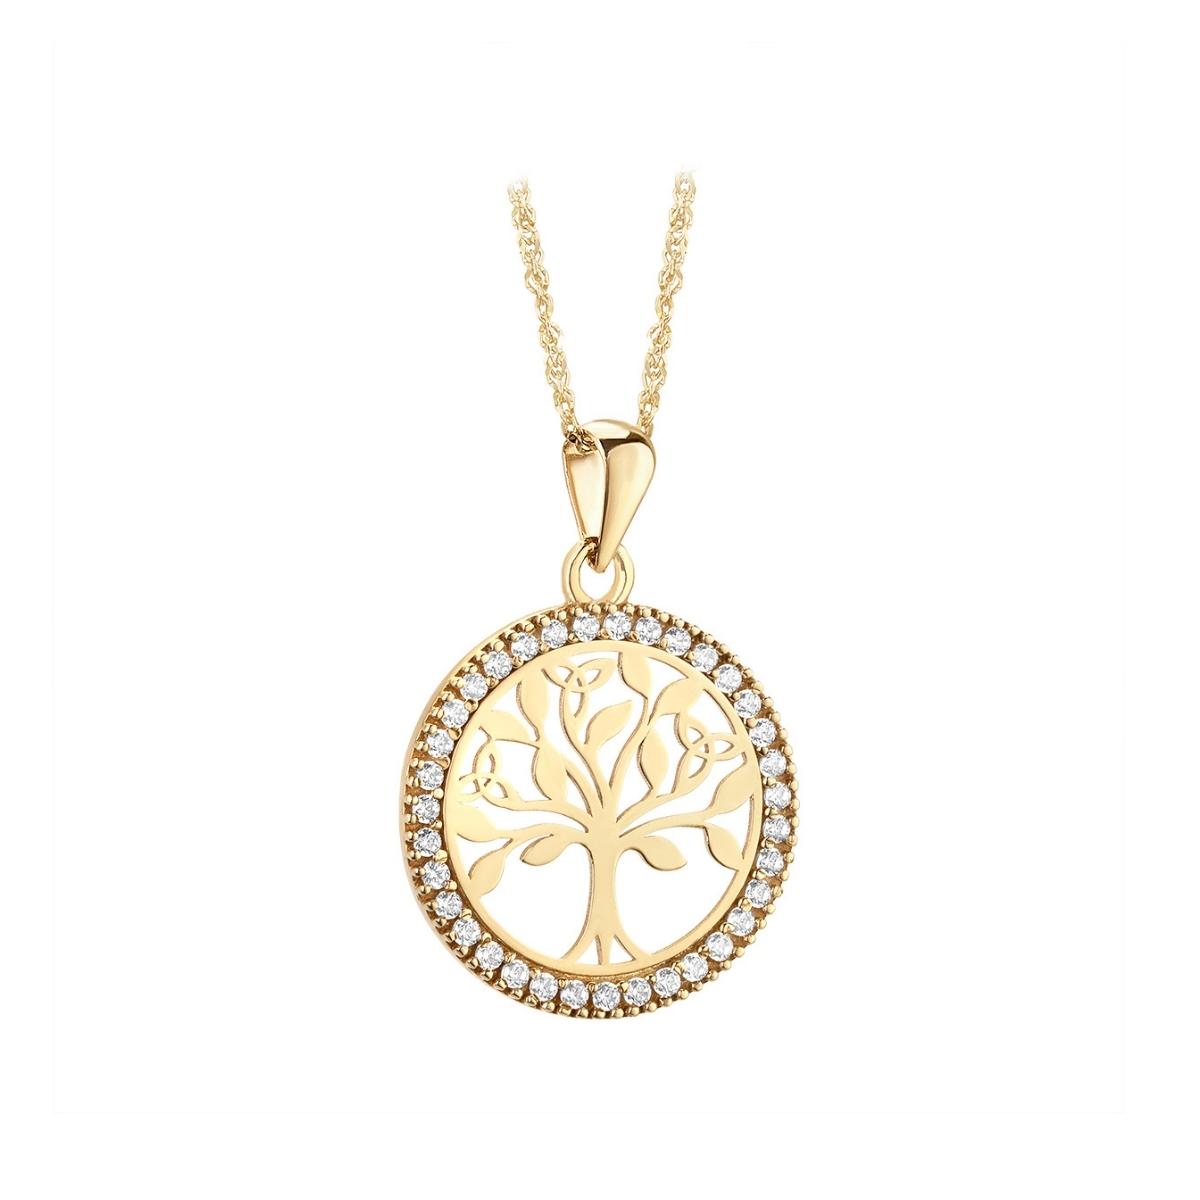 Solvar 14k gold diamond round tree of life necklace S46930